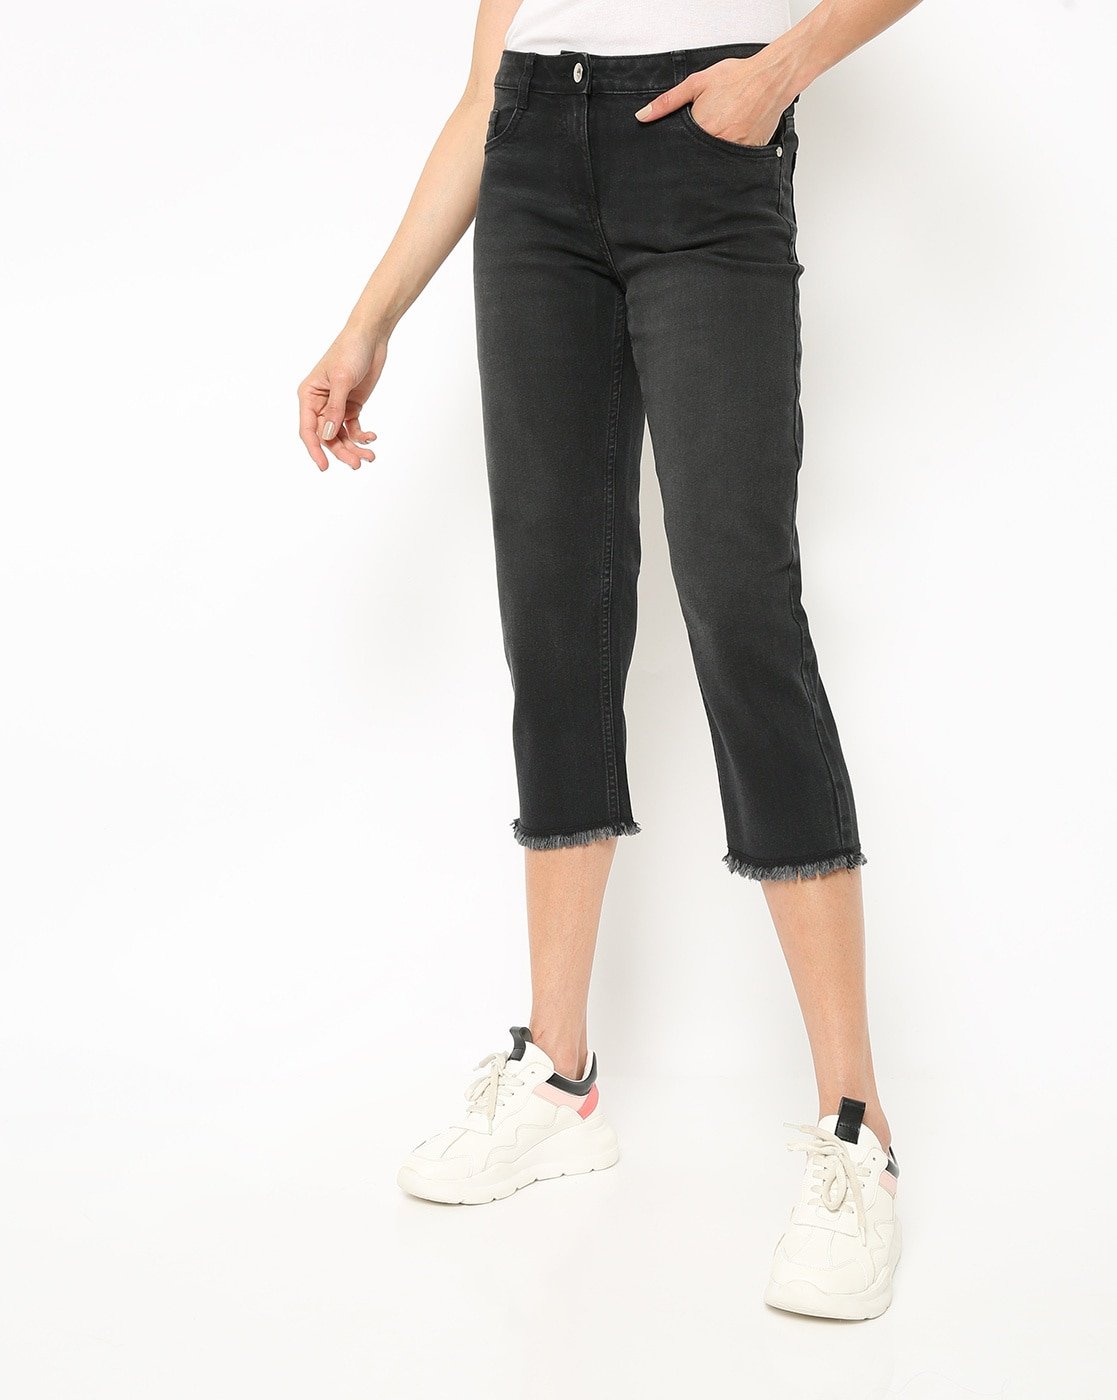 Trendigo Capri Length Skinny Jeans